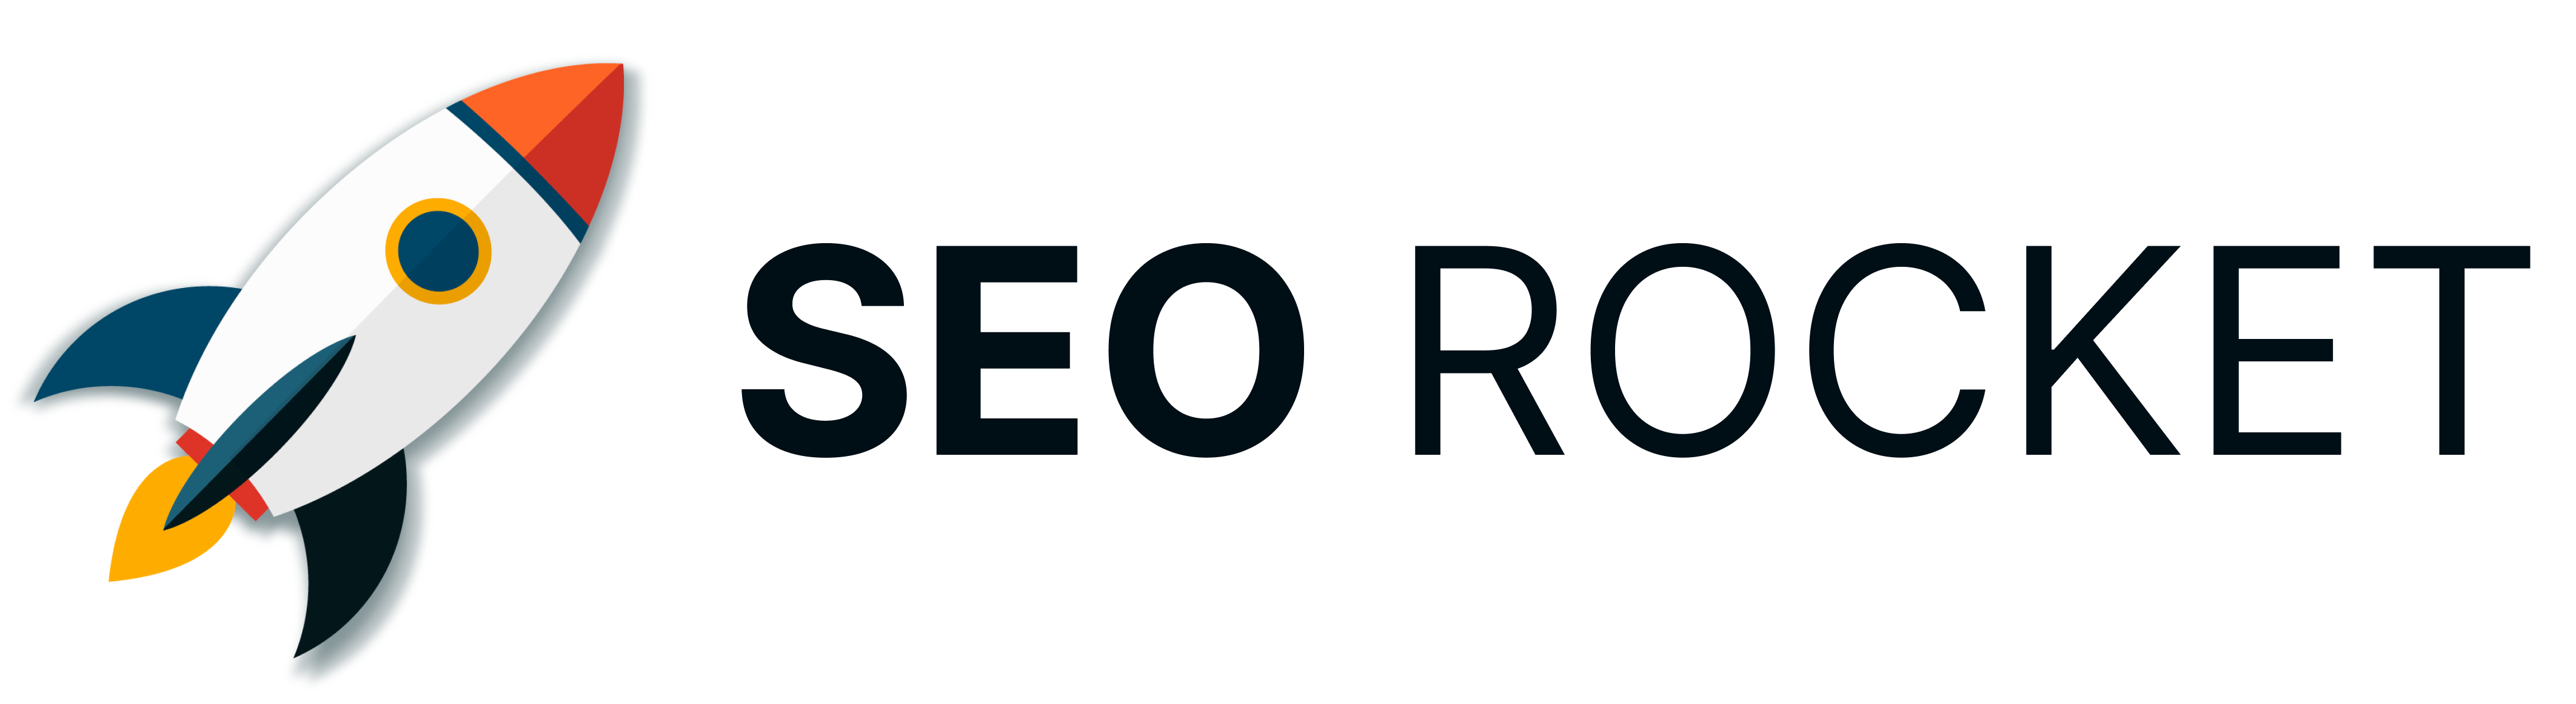 seo-rocket logo